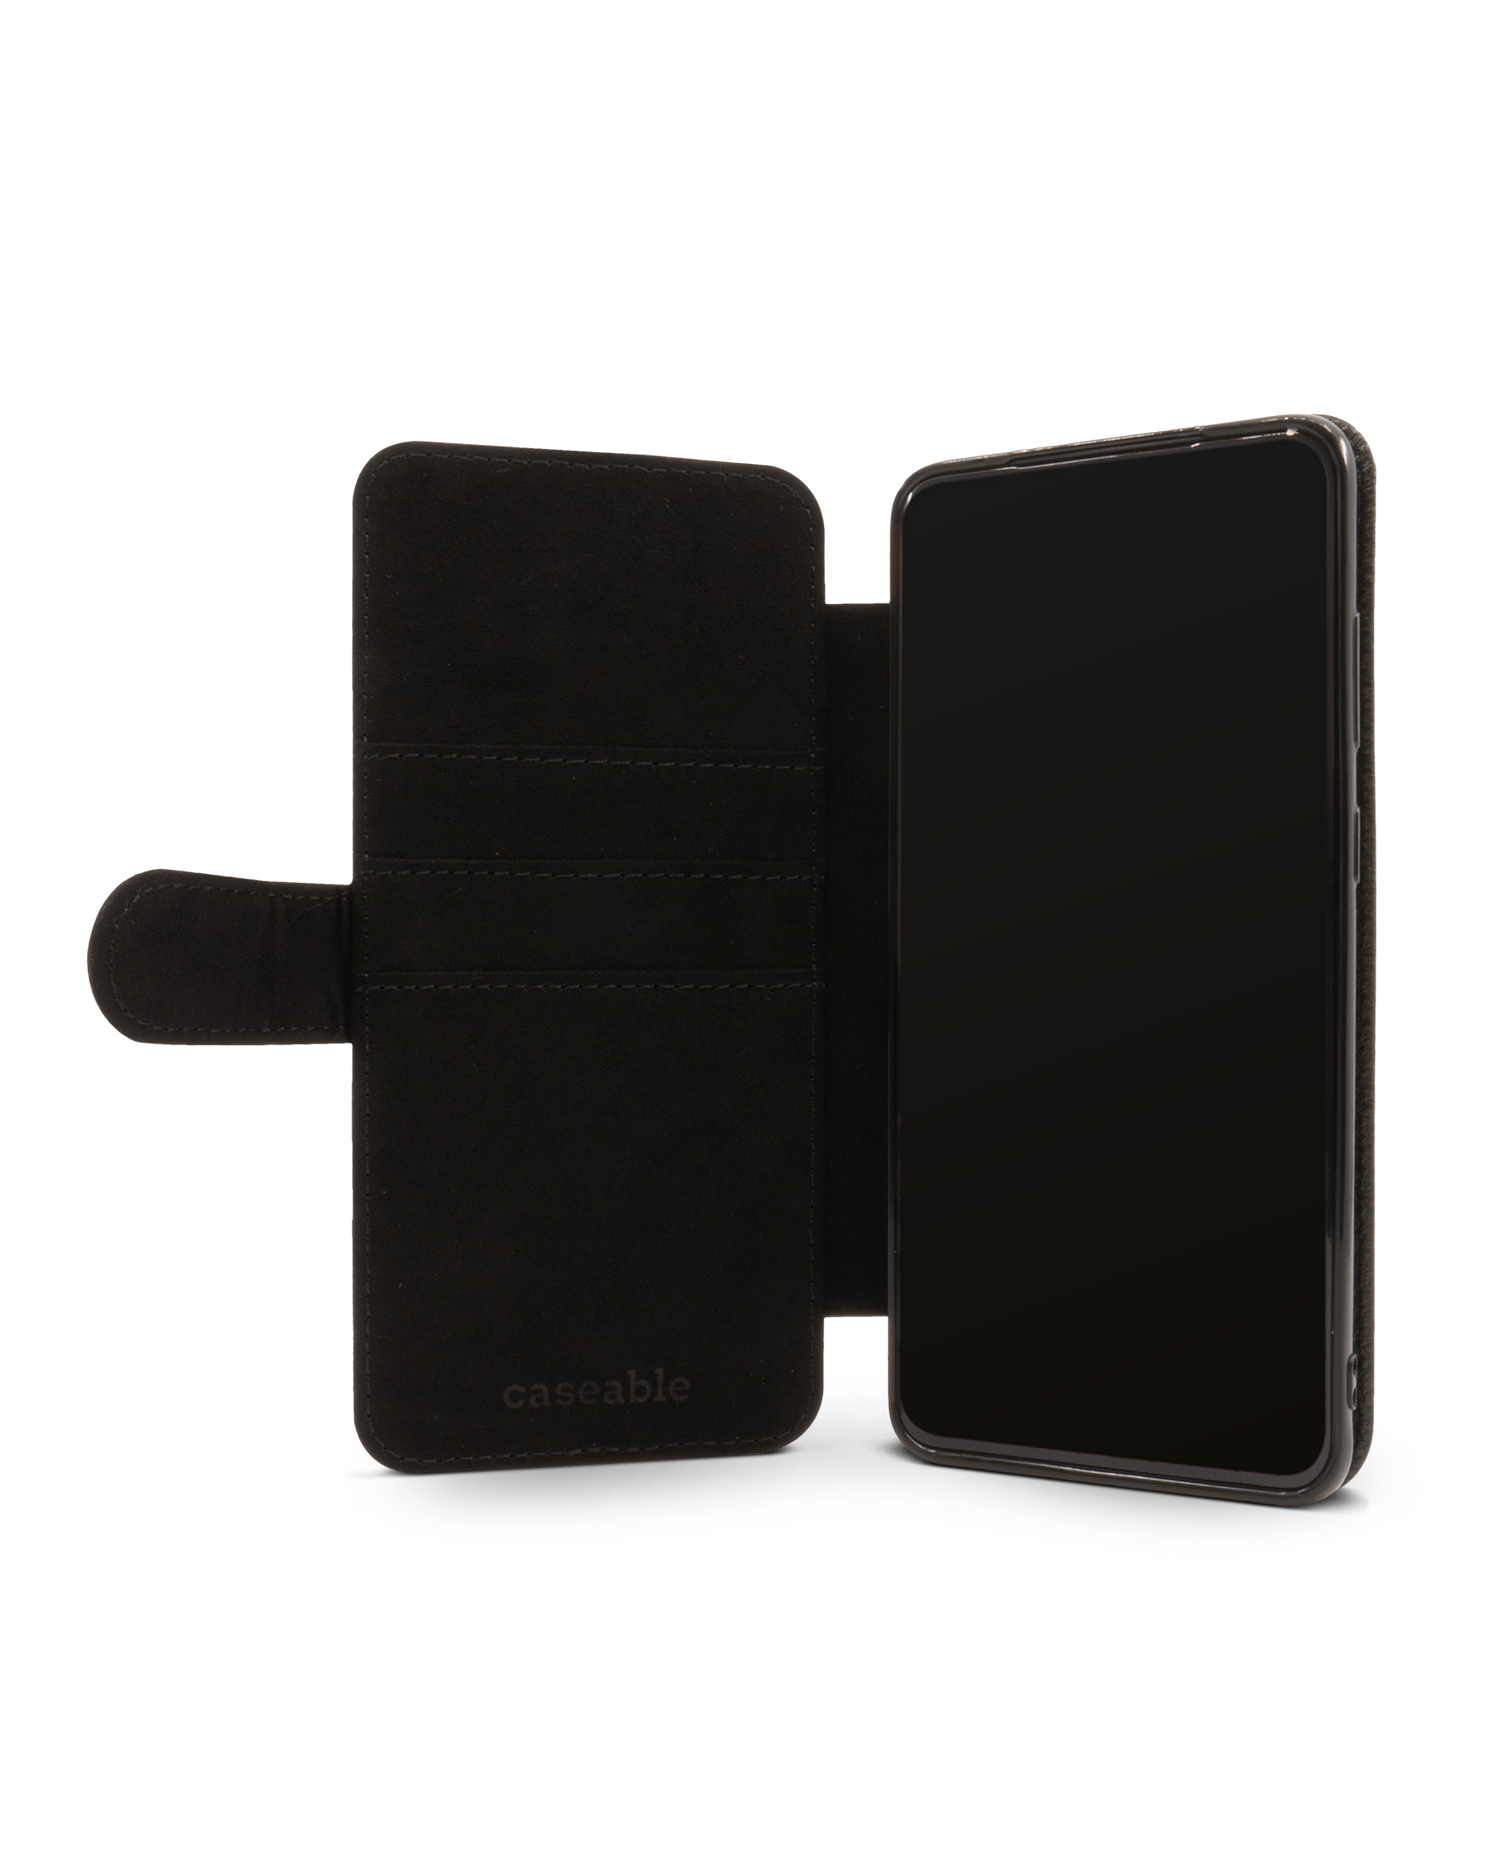 Electric Ocean 2 Wallet Phone Case Samsung Galaxy S20 Plus: Inside View